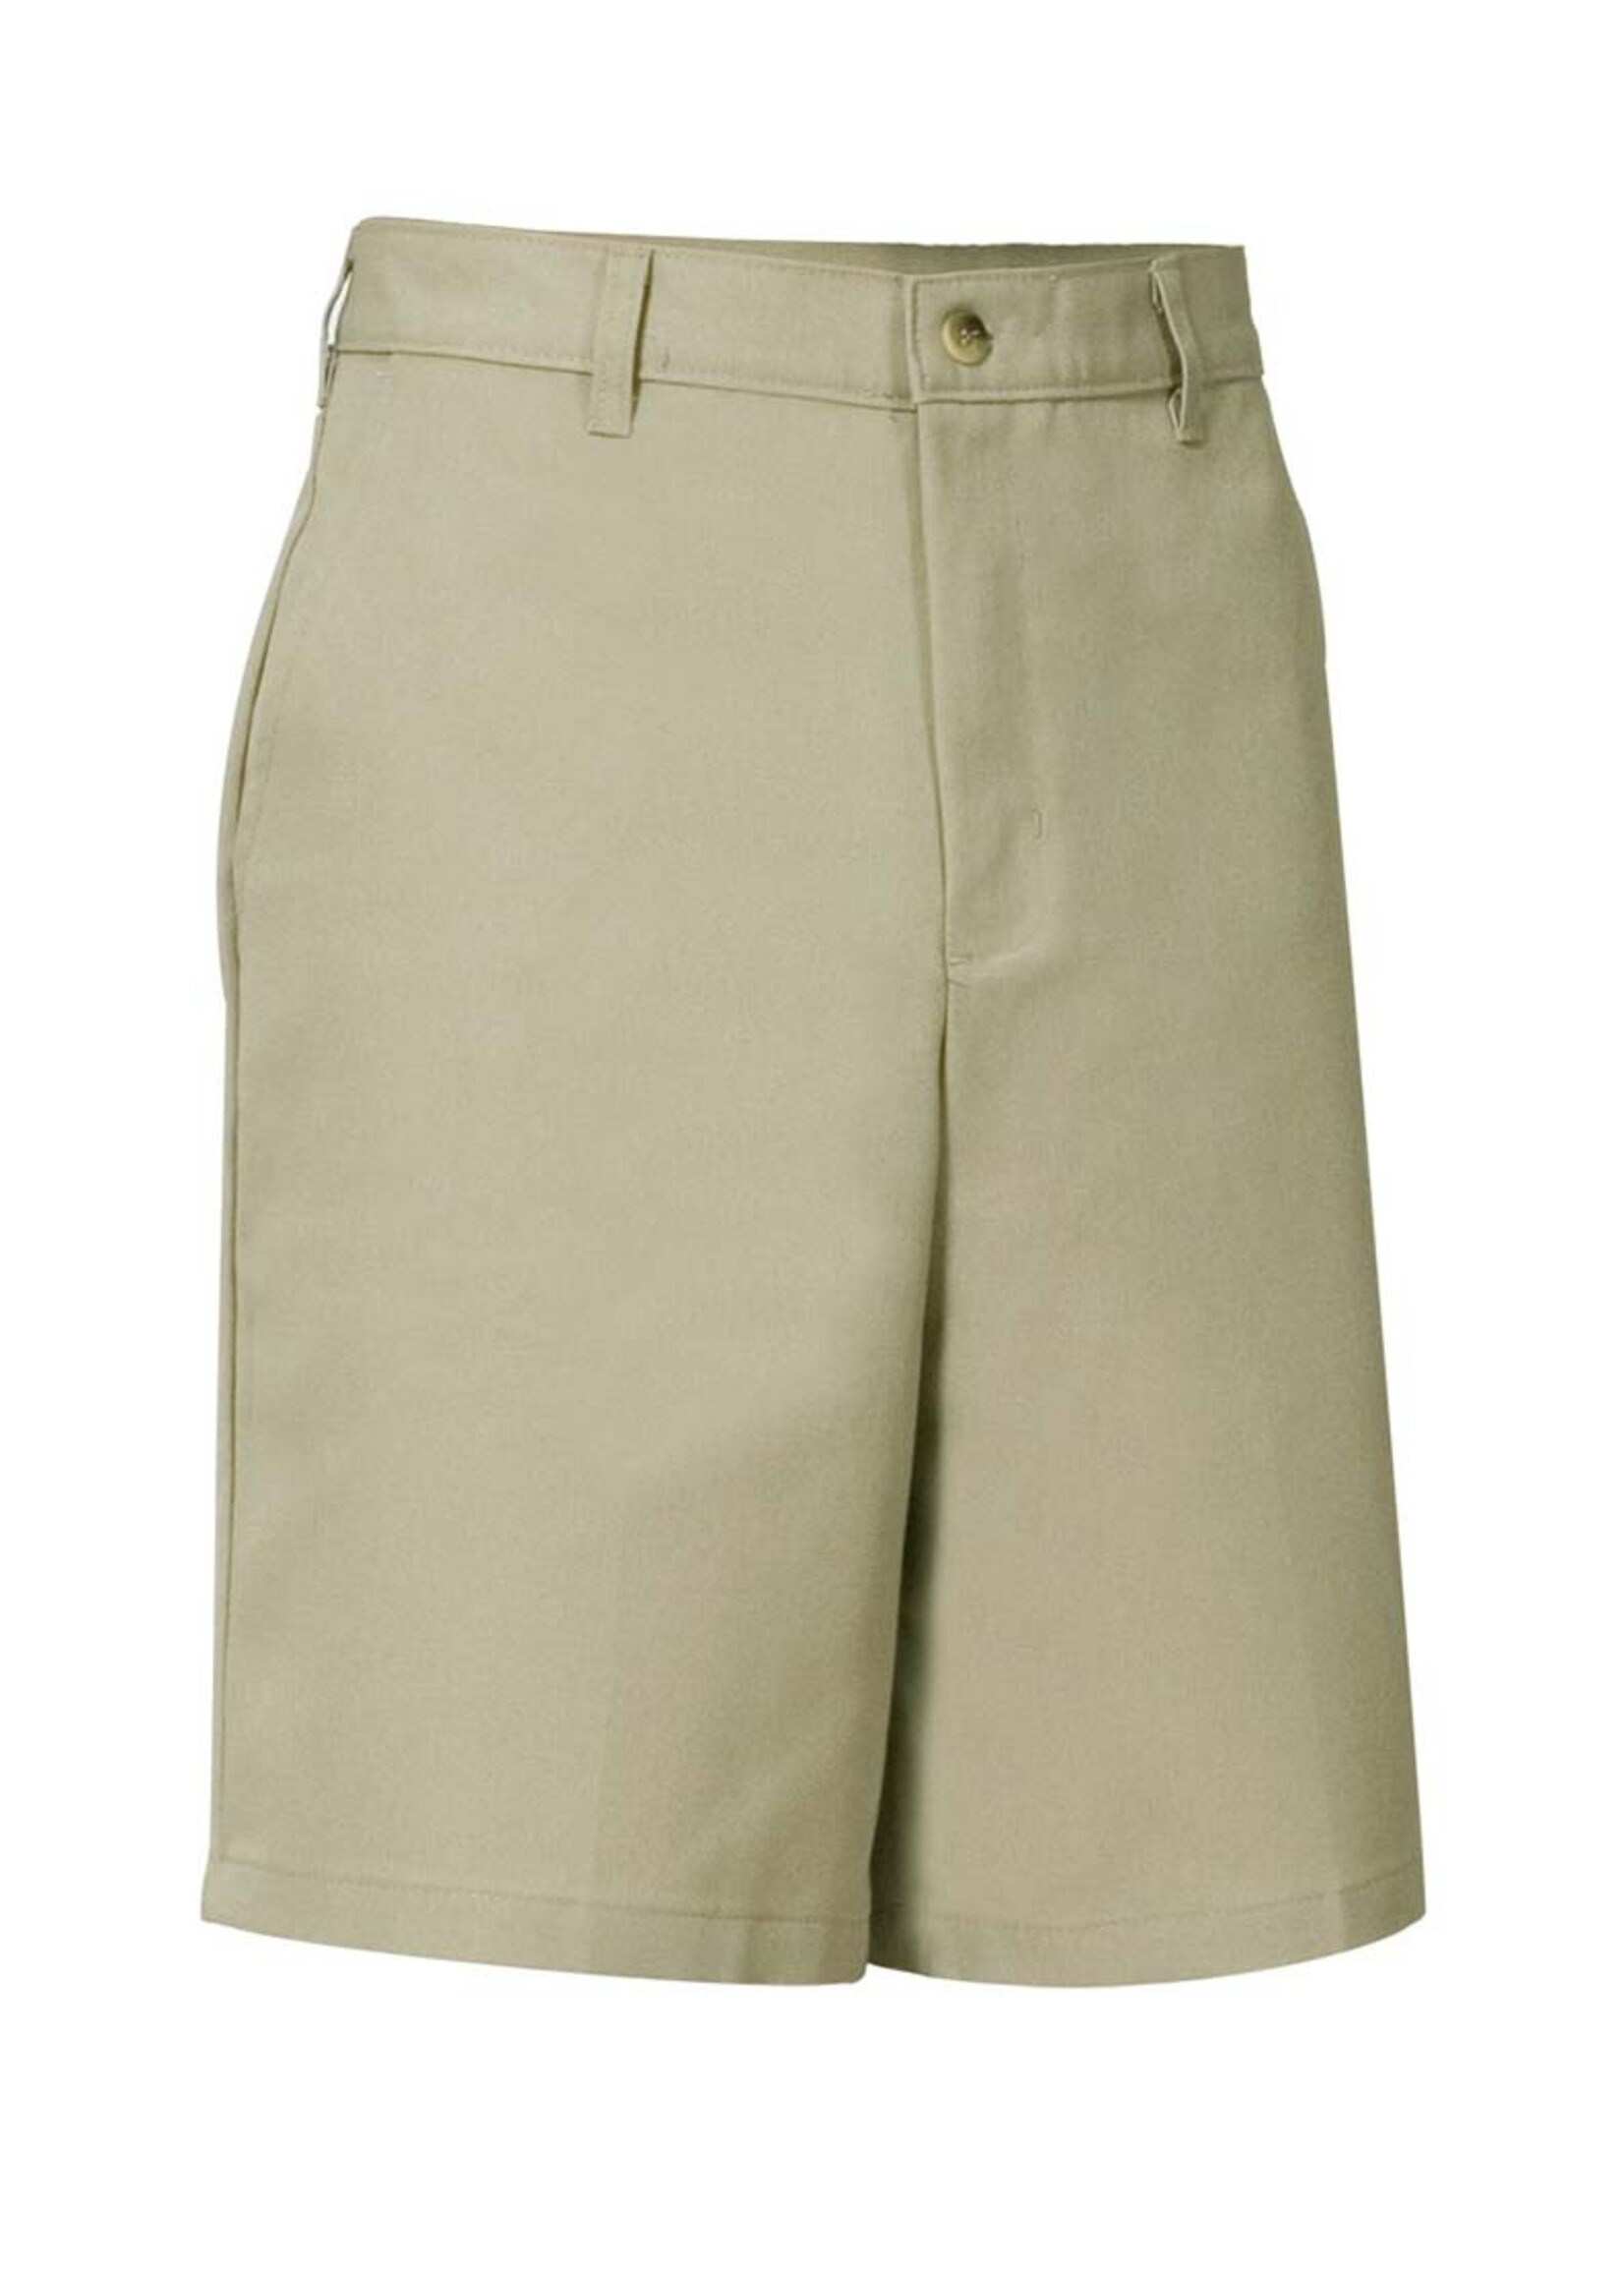 A+ Boys Flat Front Shorts (KN)